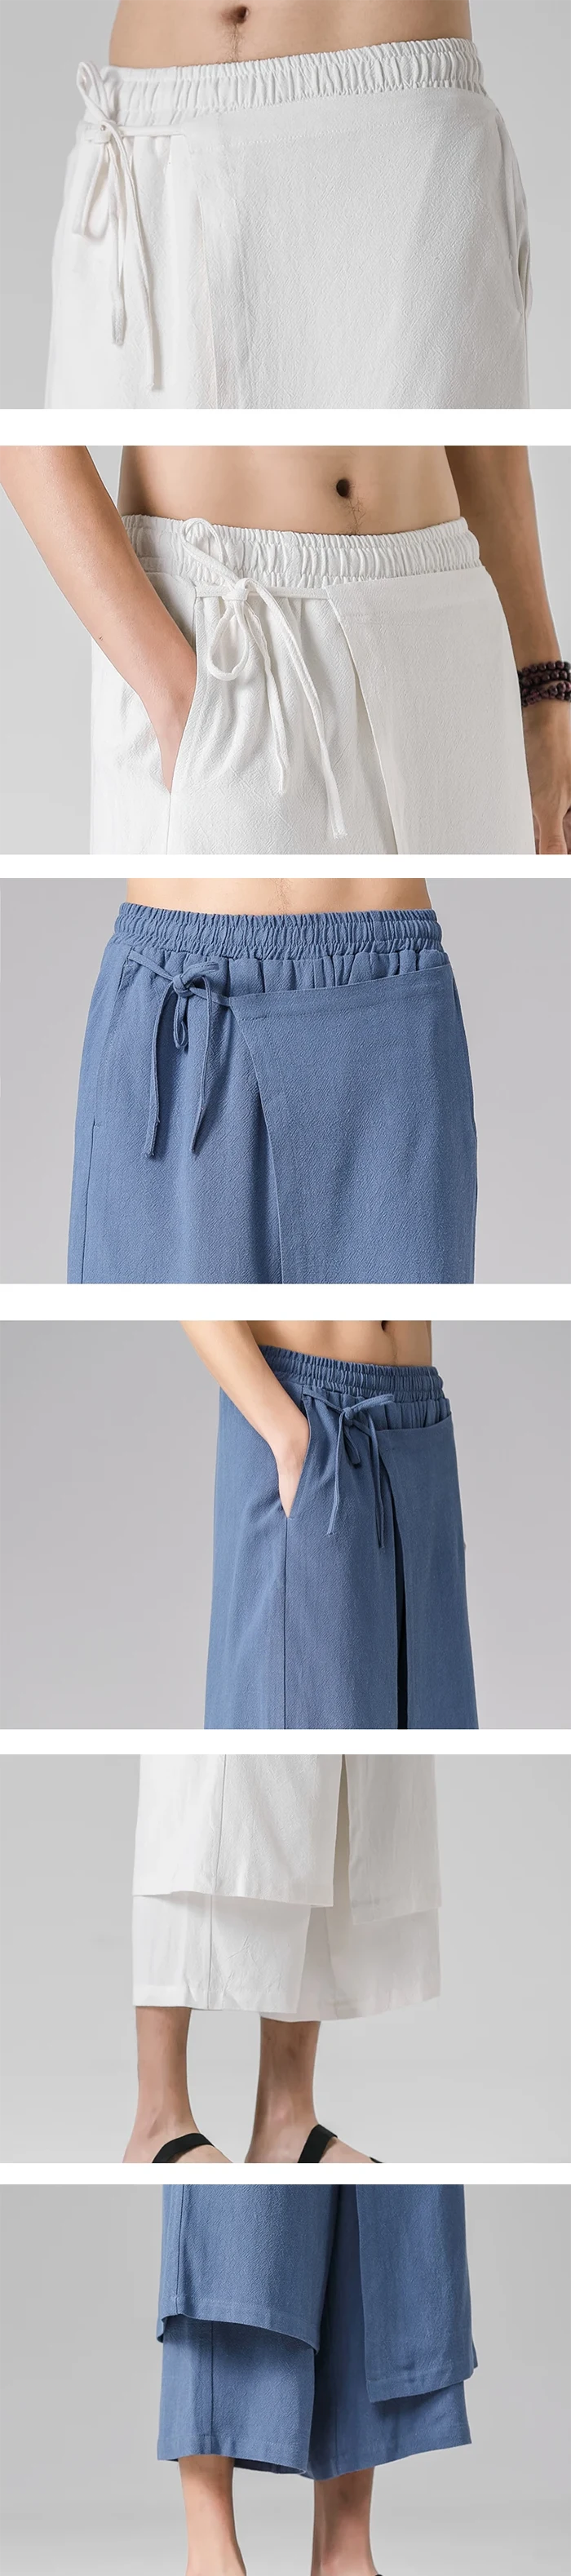 details of the Hakama inspired pants "Tagawa"